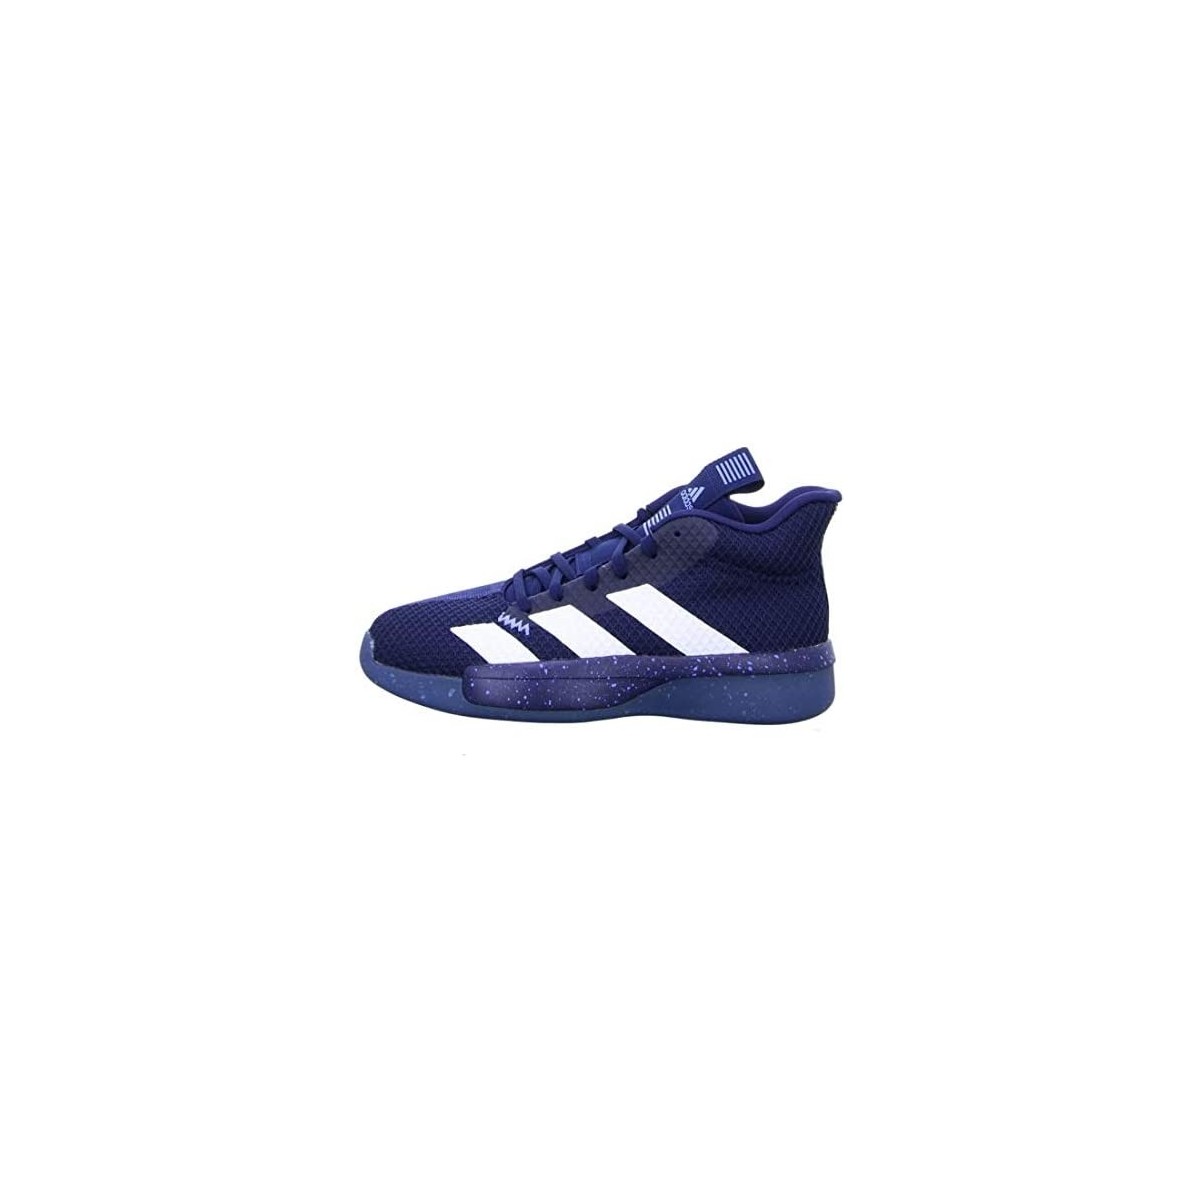 draadloos hanger Assimilatie Shoes Adidas Pro Next 2019 F97272